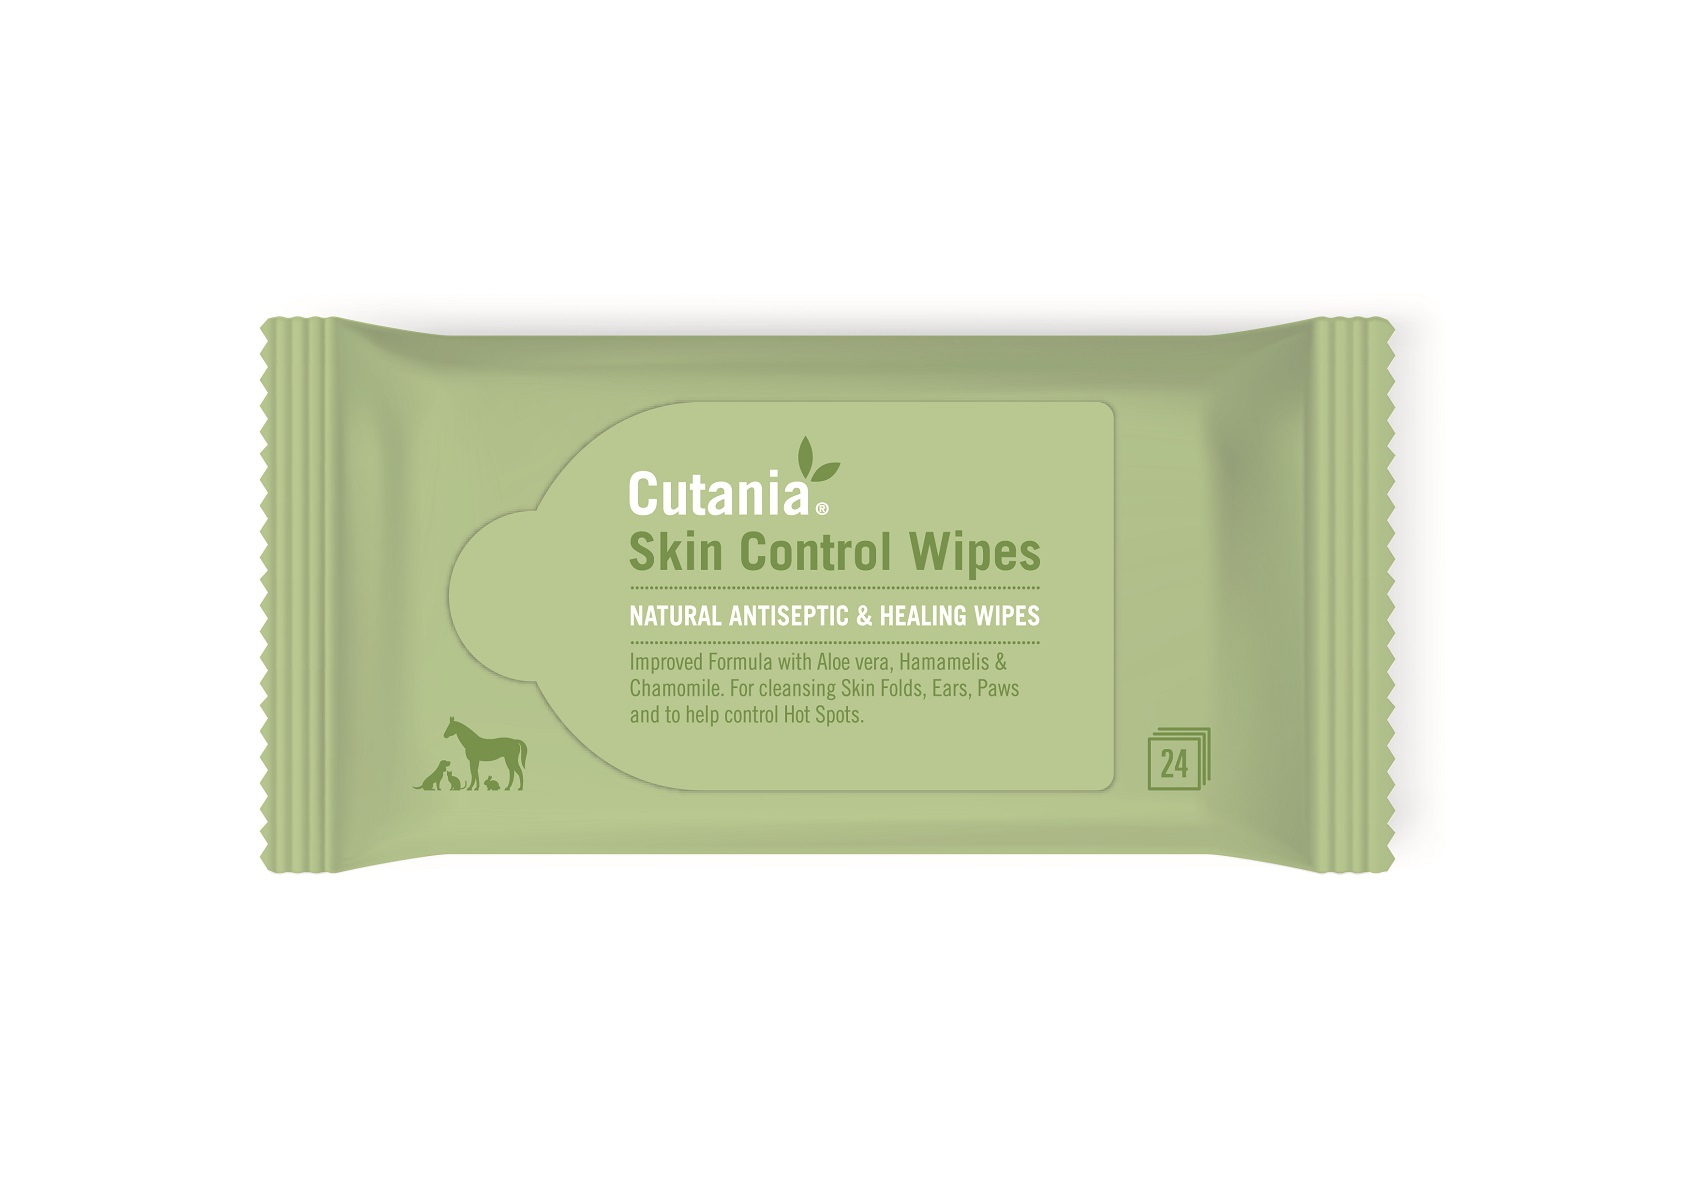 CUTANIA SkinControl Wipes Toallitas higiénicas para perros, gatos, caballos y otros animales